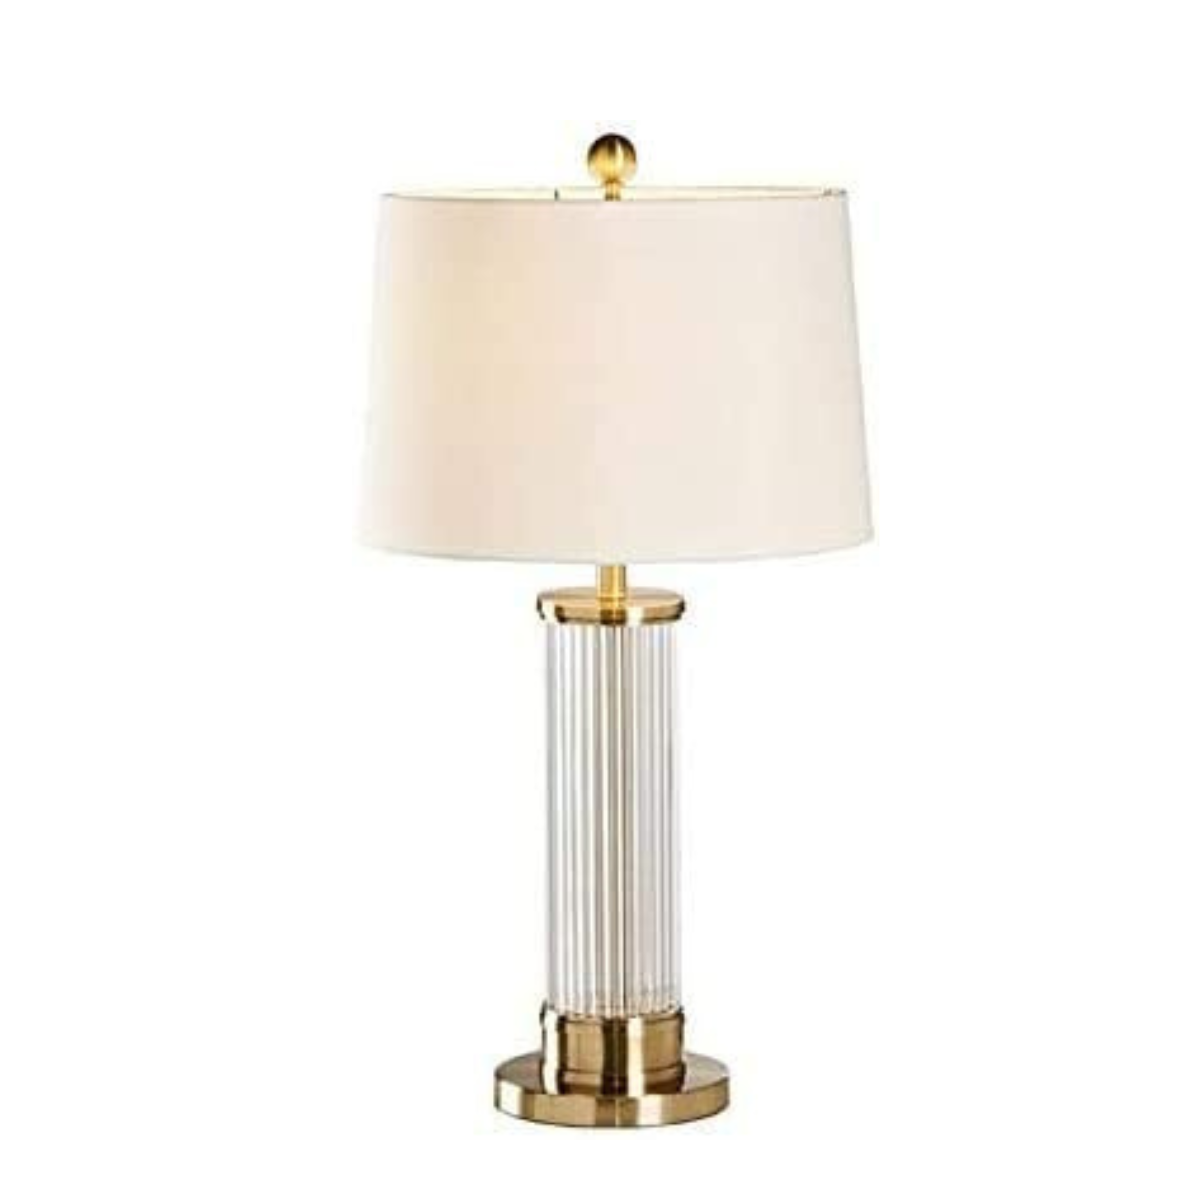 Reneva-Crystal-Based-Bedside-Table-Lamp-9